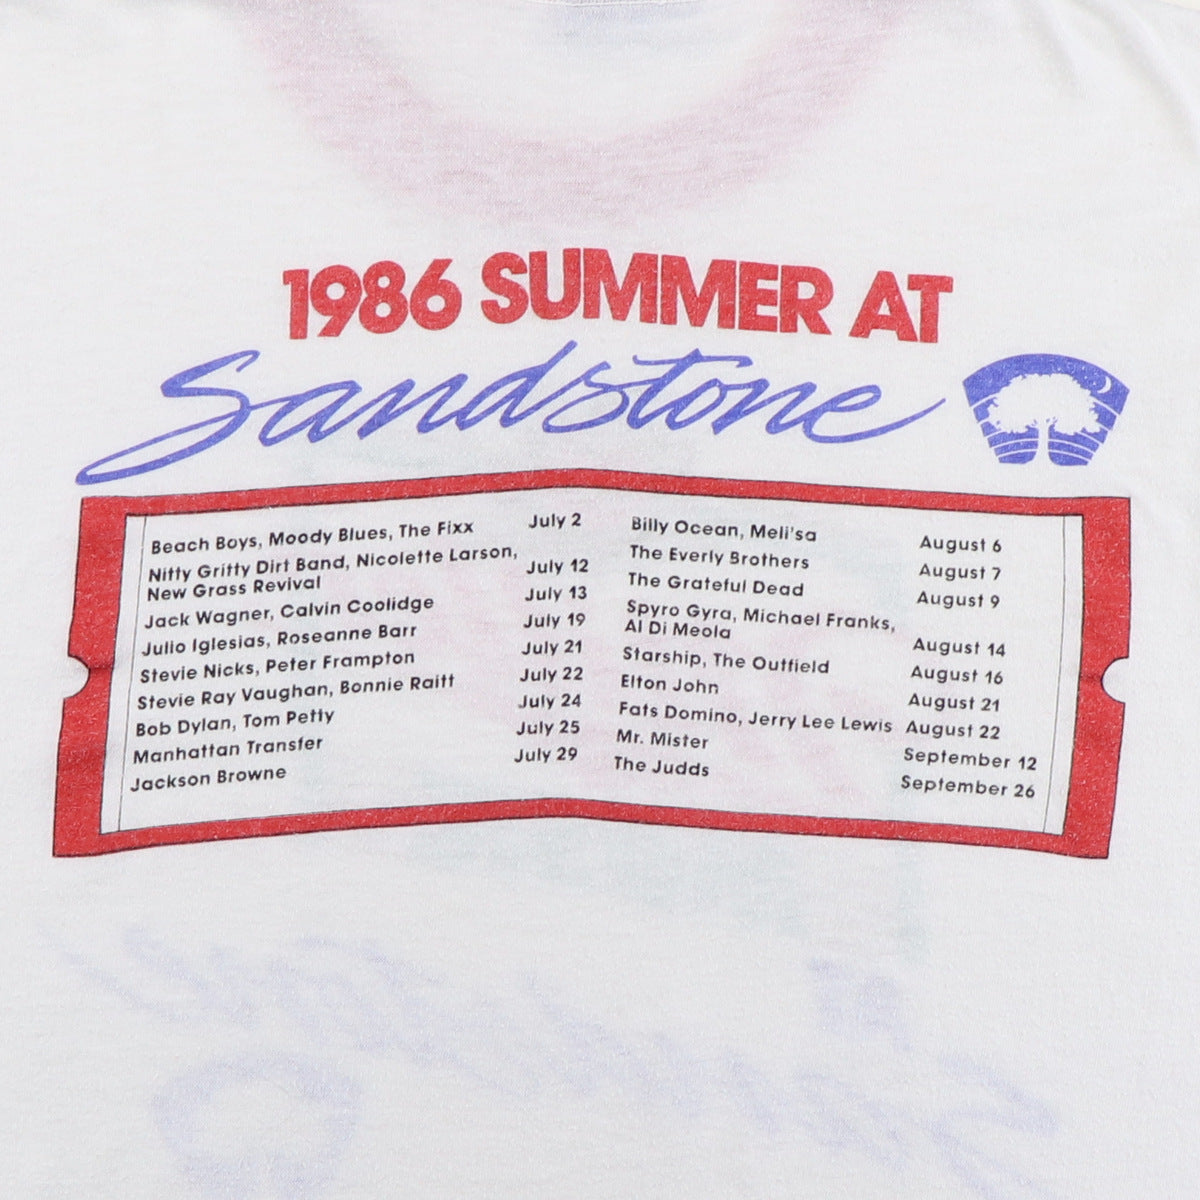 1986 Summer At Sandstone Kansas City Concert Shirt